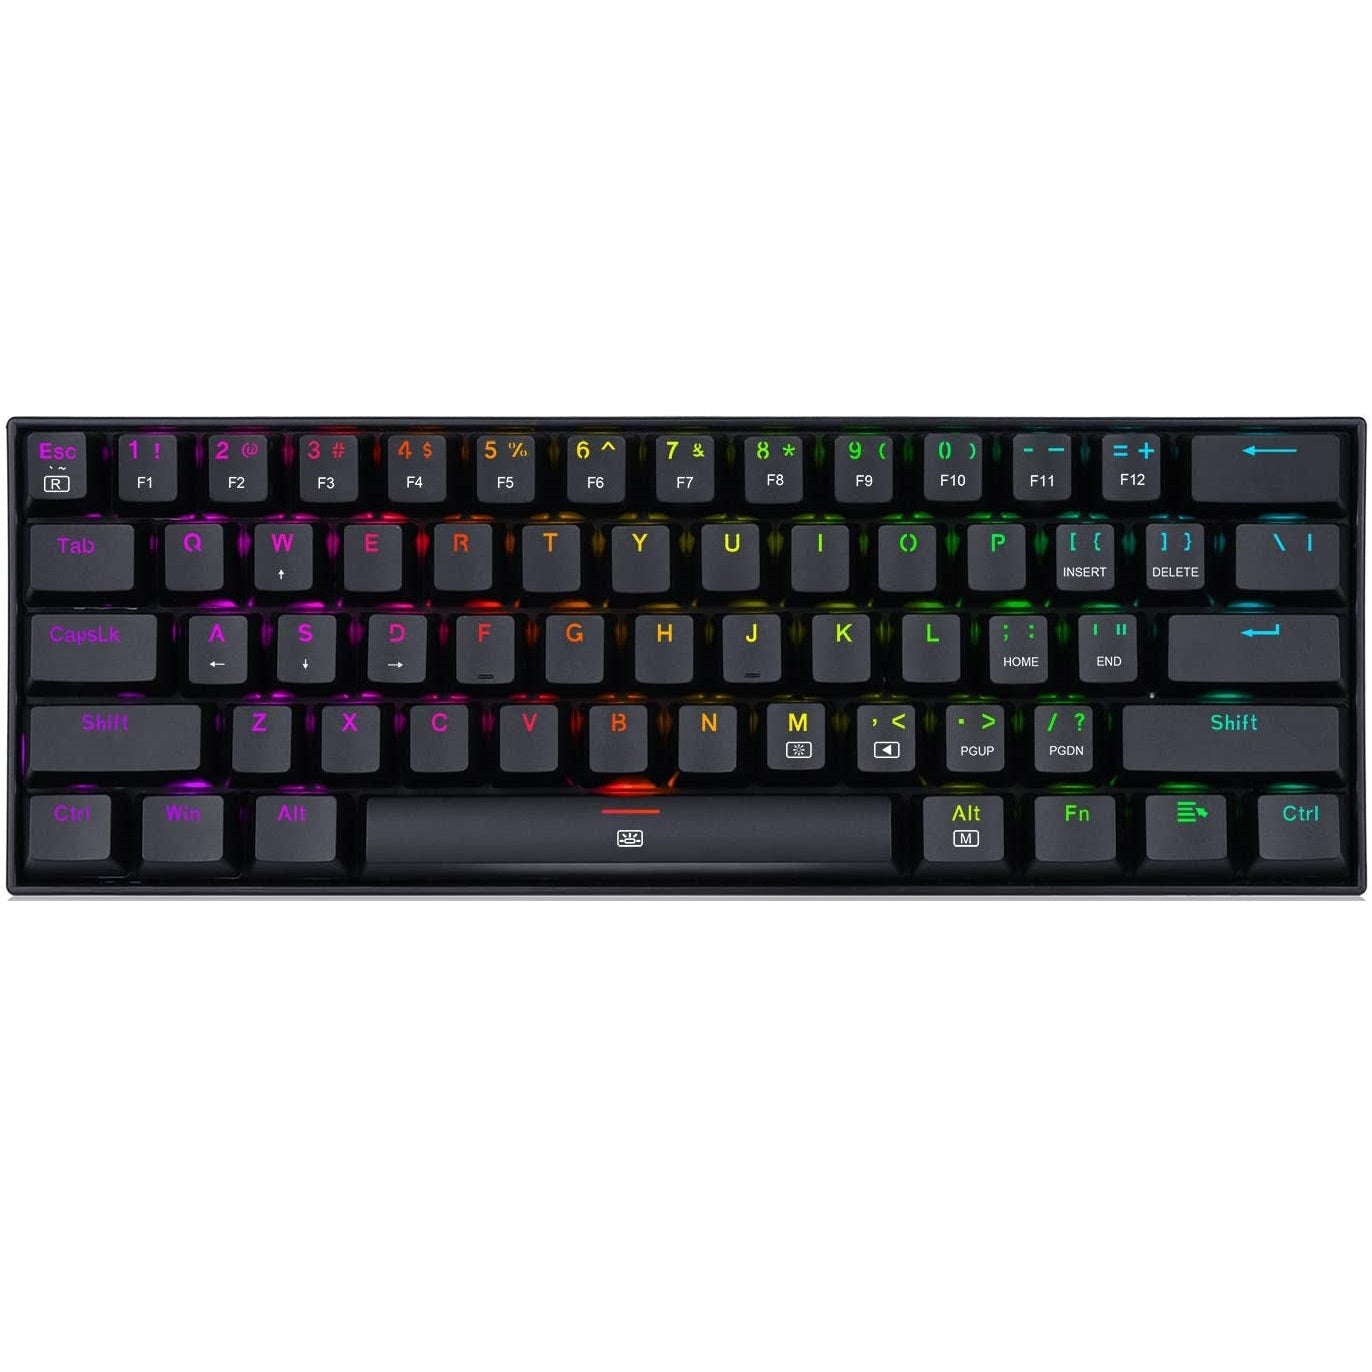 Buy RedRagon K630 W Gaming Keyboard Price in Pakistan